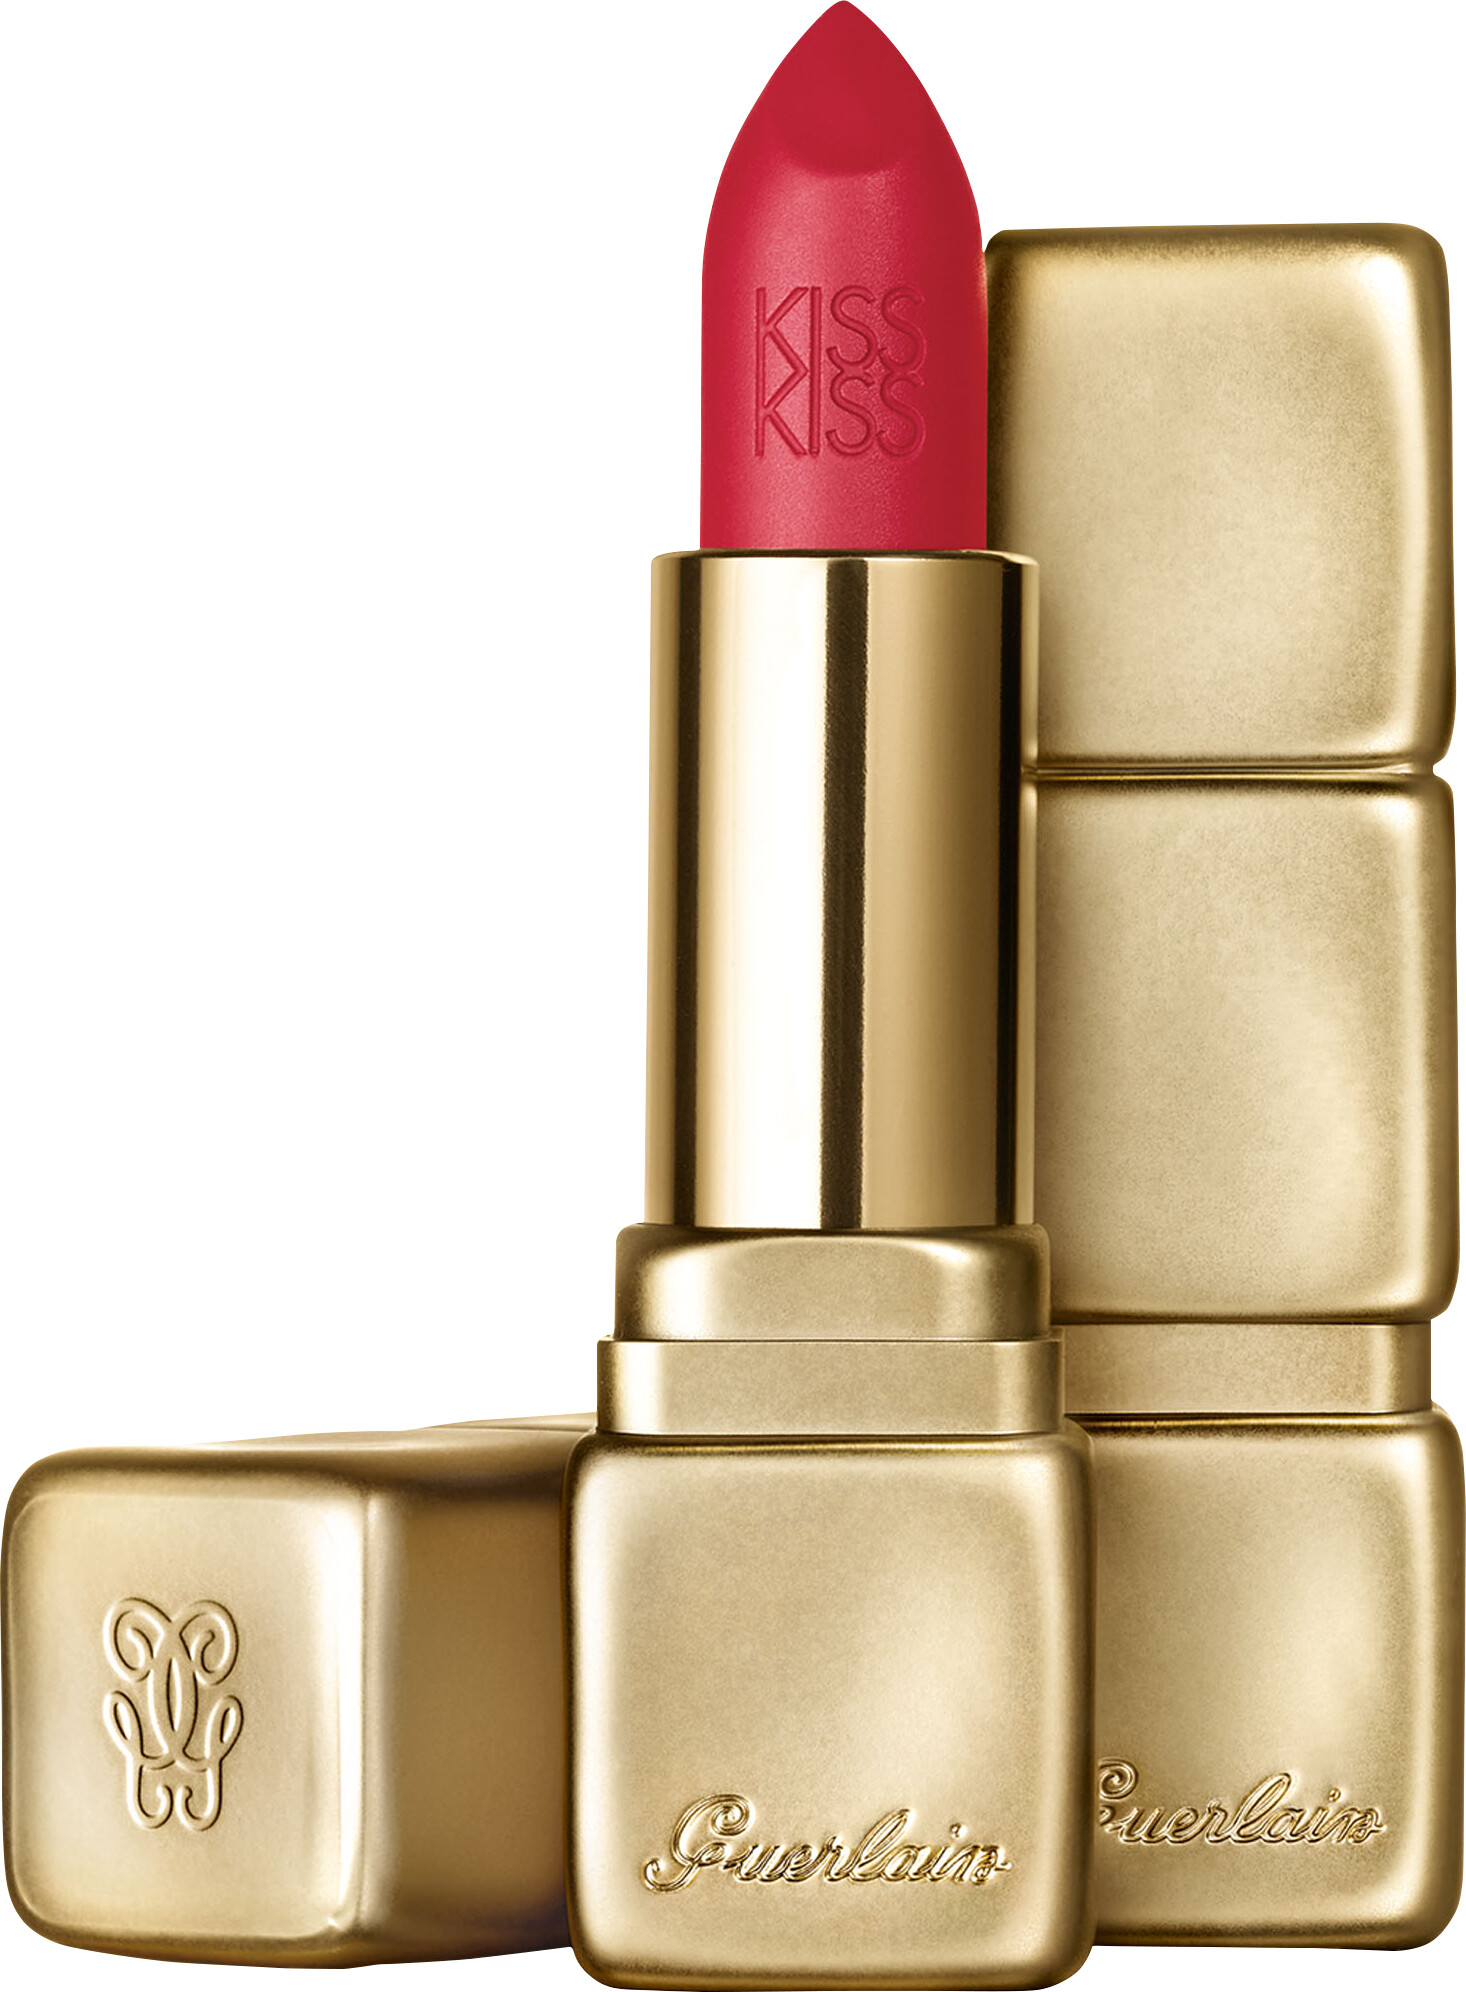 GUERLAIN KISSKISS Hydrating & Plumping Velvet Matte Lip Colour 3.5g M376 - Daring Pink